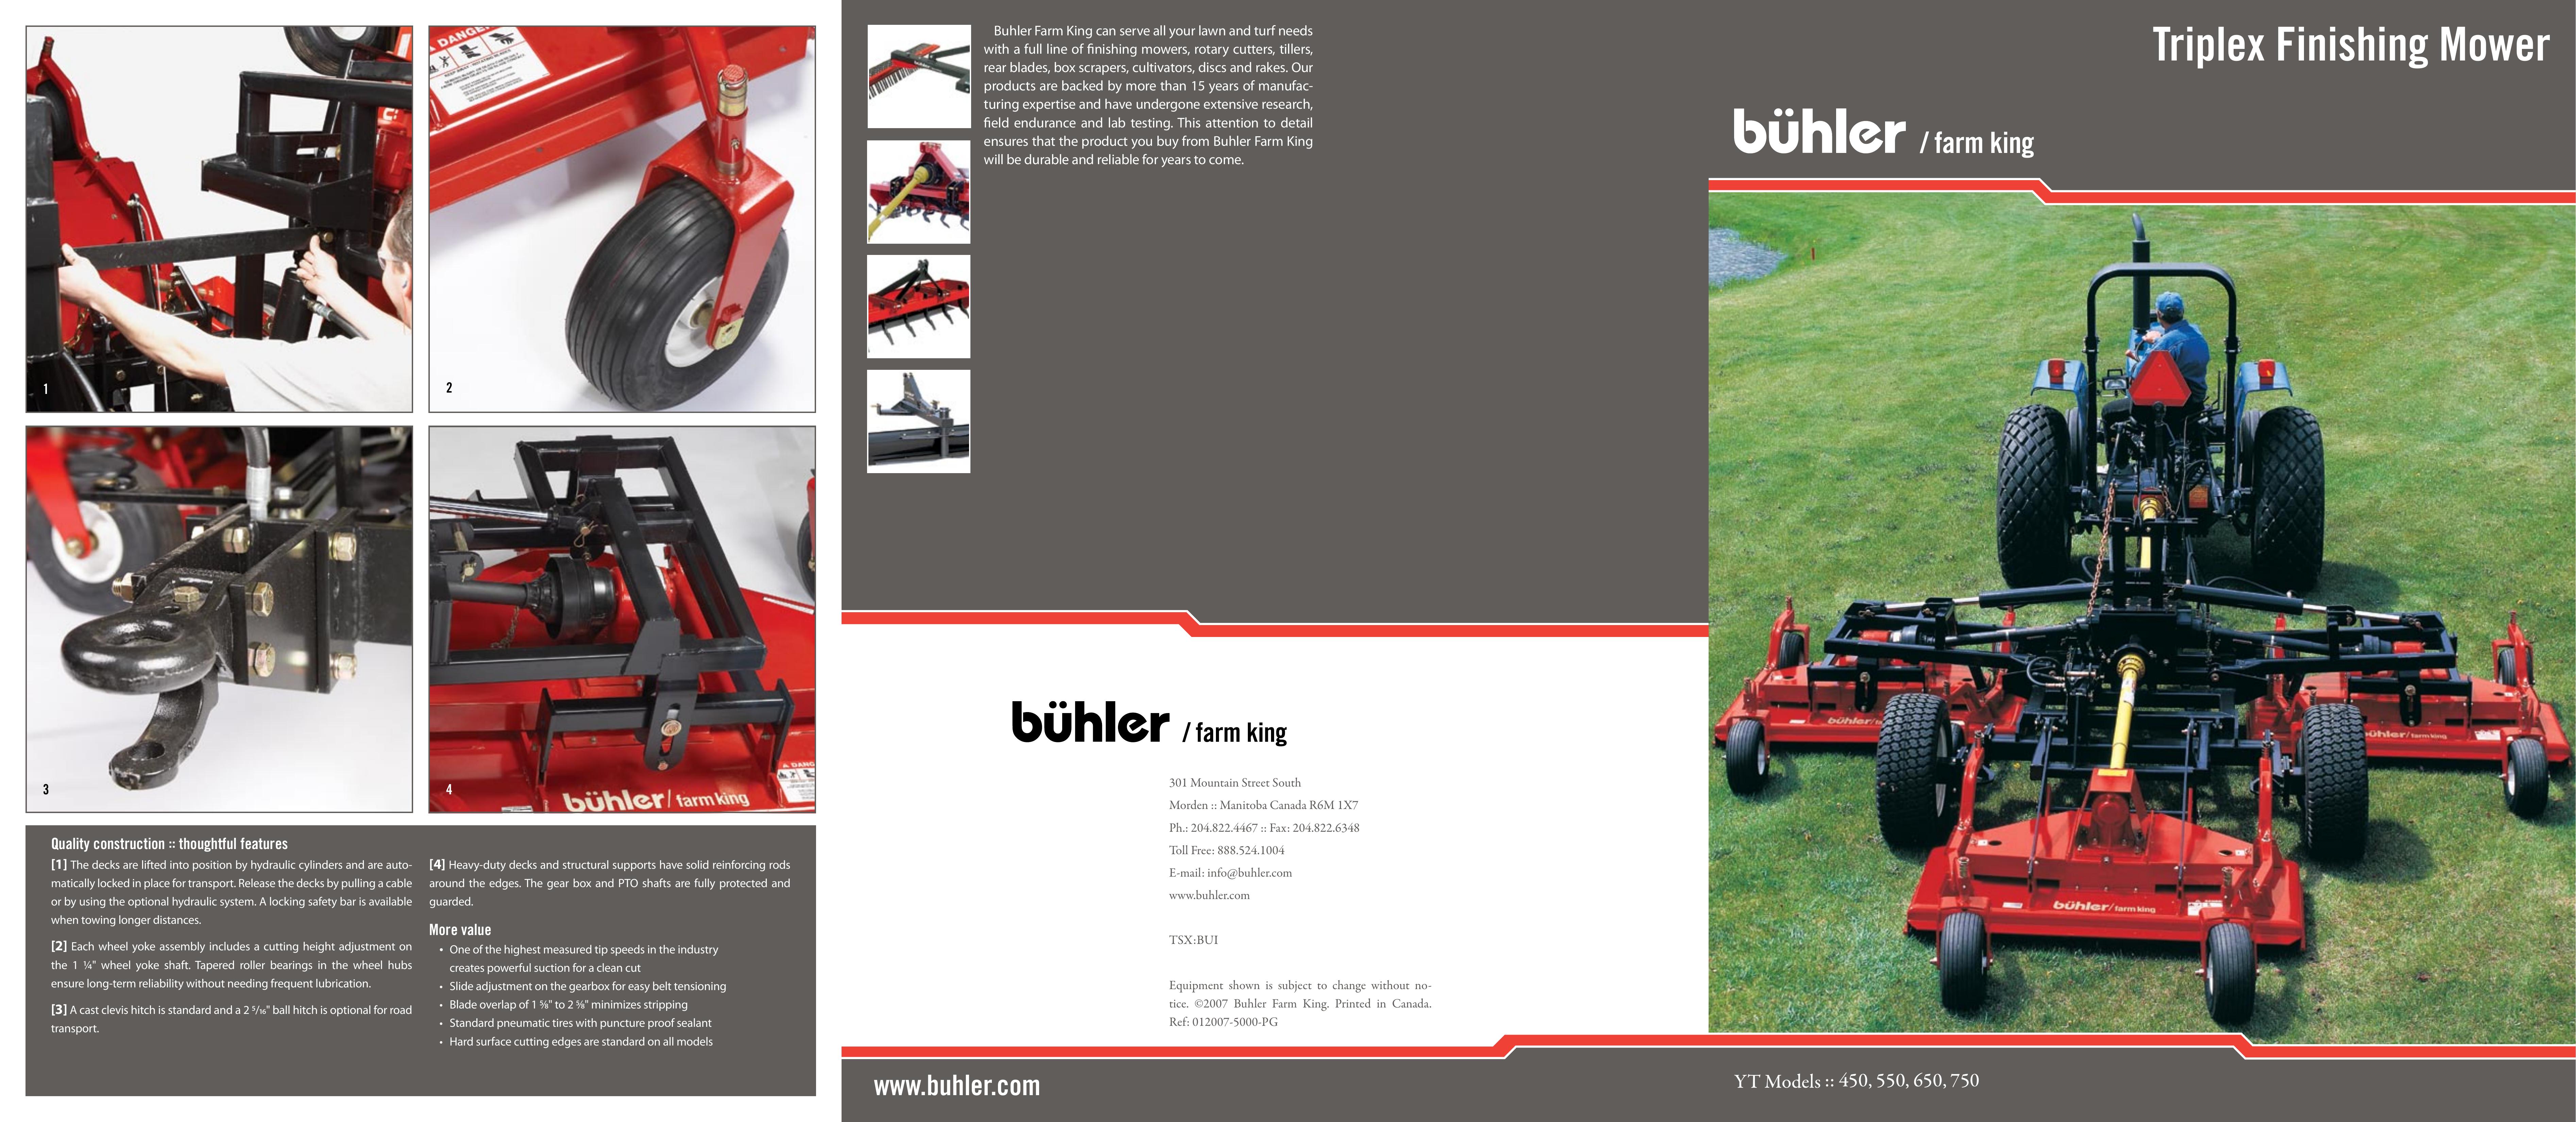 Buhler YT750 Lawn Mower User Manual